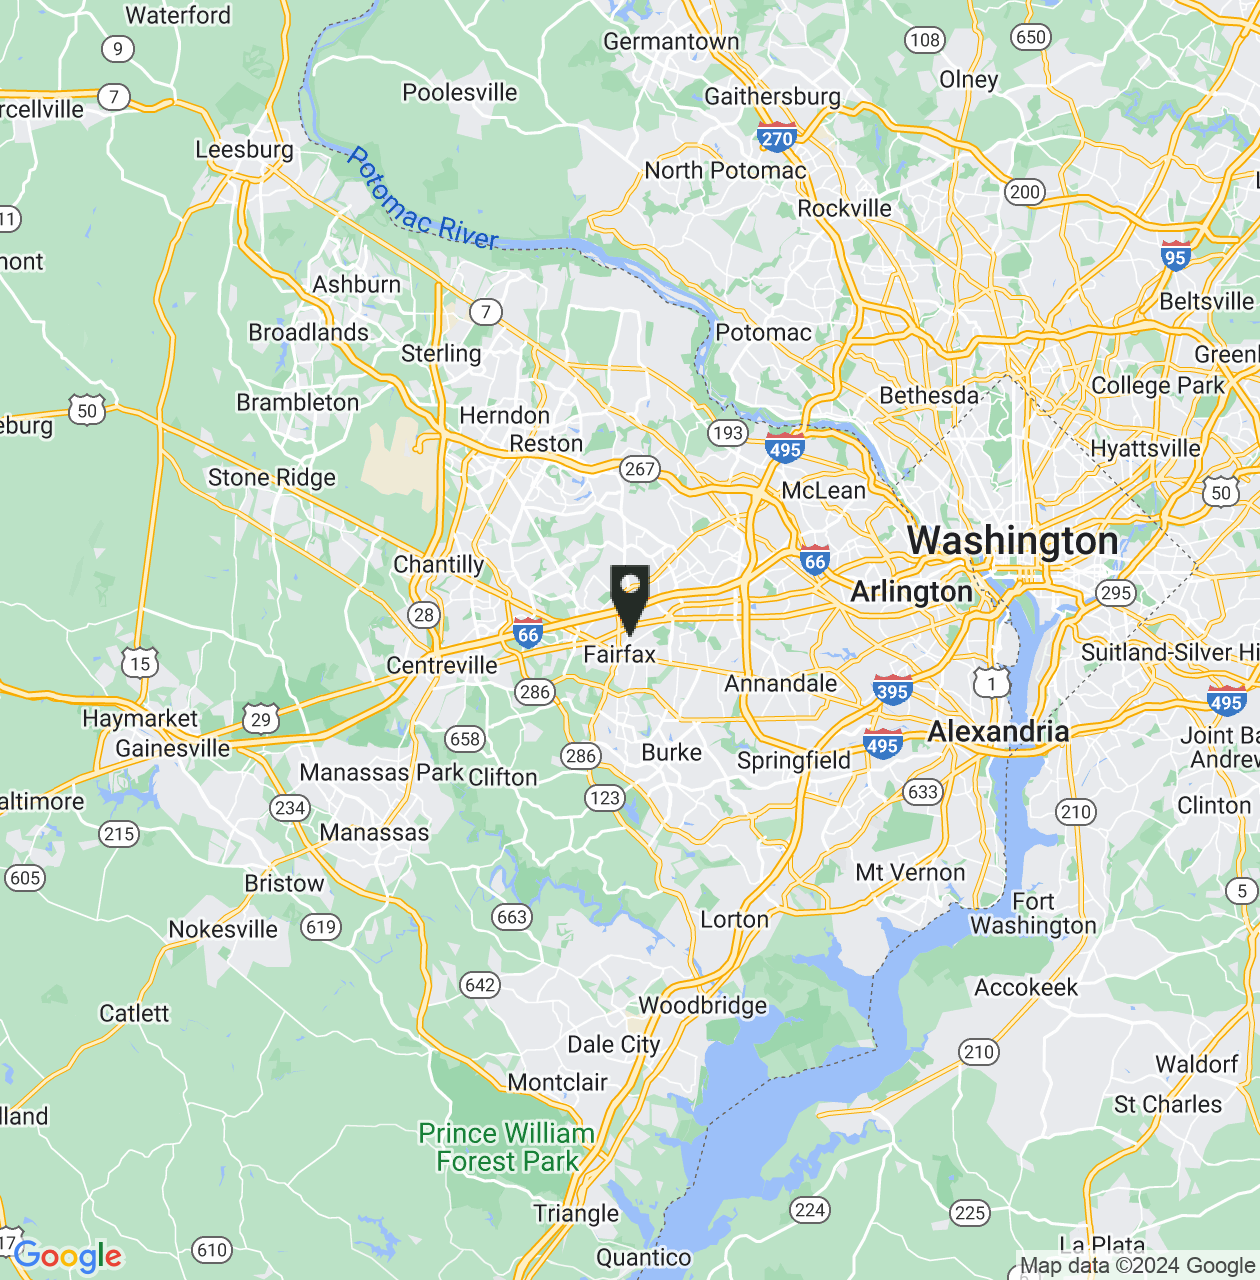 Map showing Fairfax County, Virginia